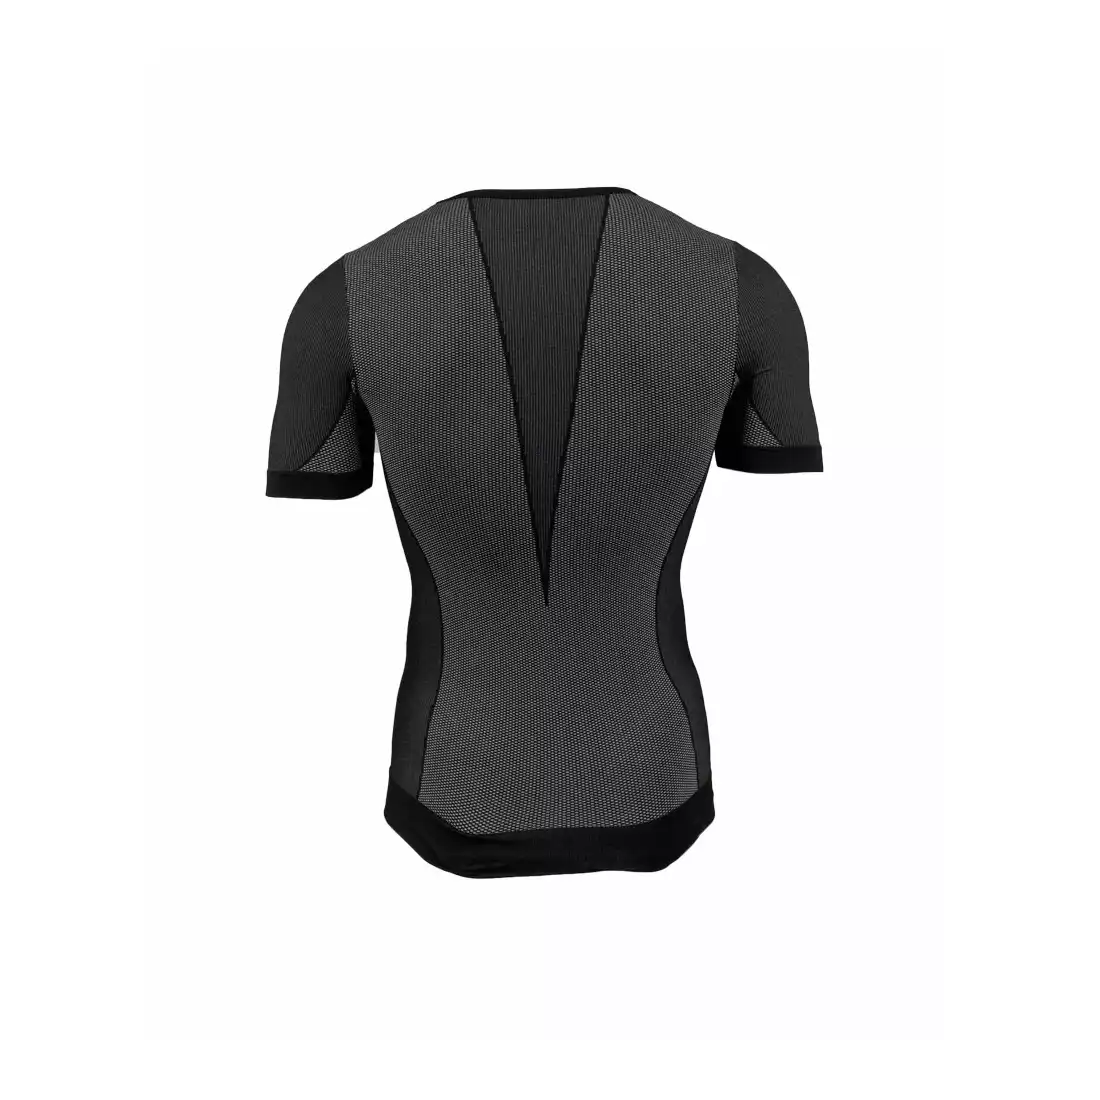 ROGELLI CHASE 070.004 - bielizna termoaktywna - męska koszulka - kolor: Czarny